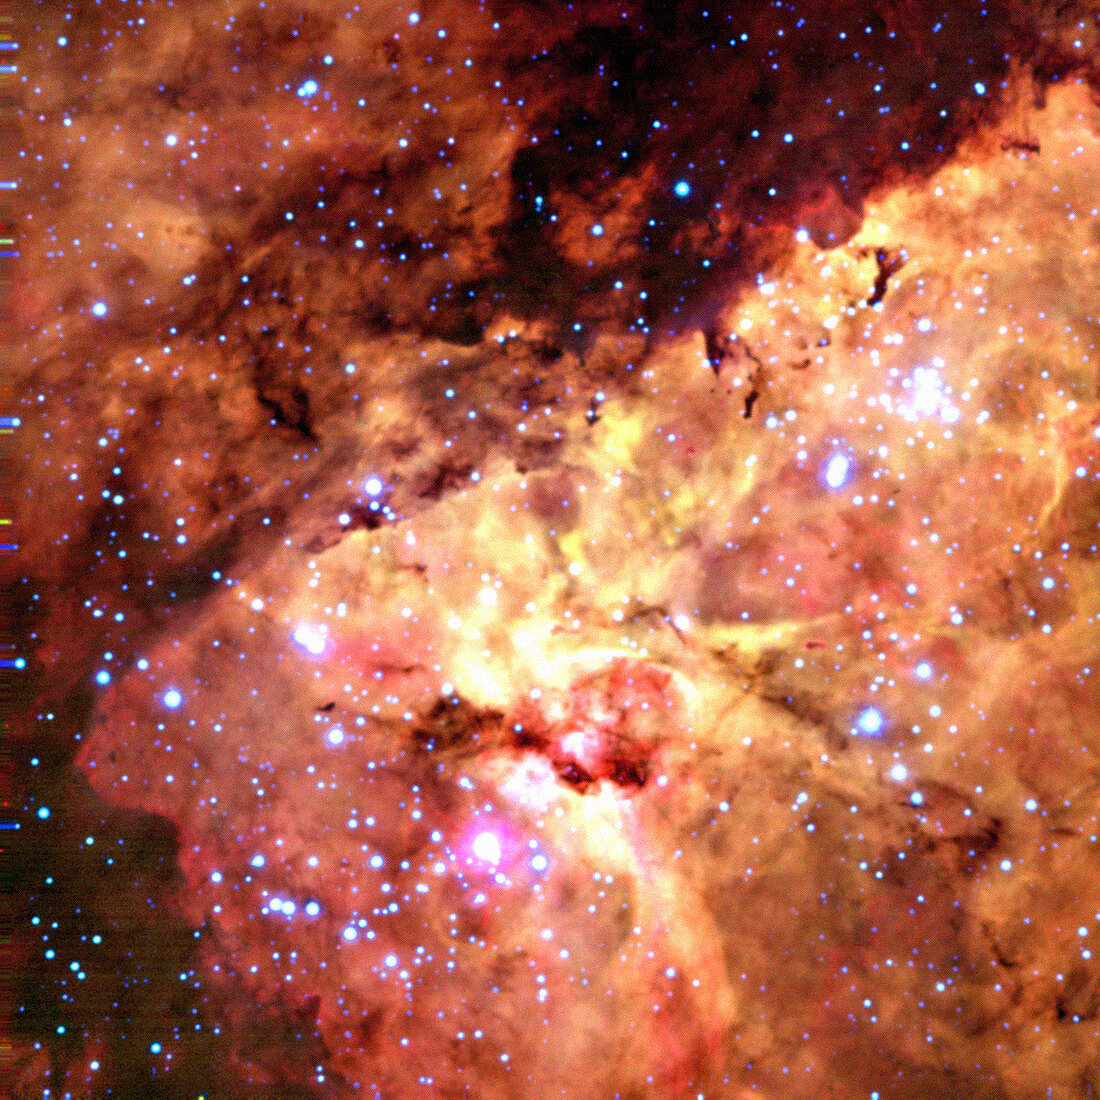 CCD optical image of heart of Eta Carinae nebula